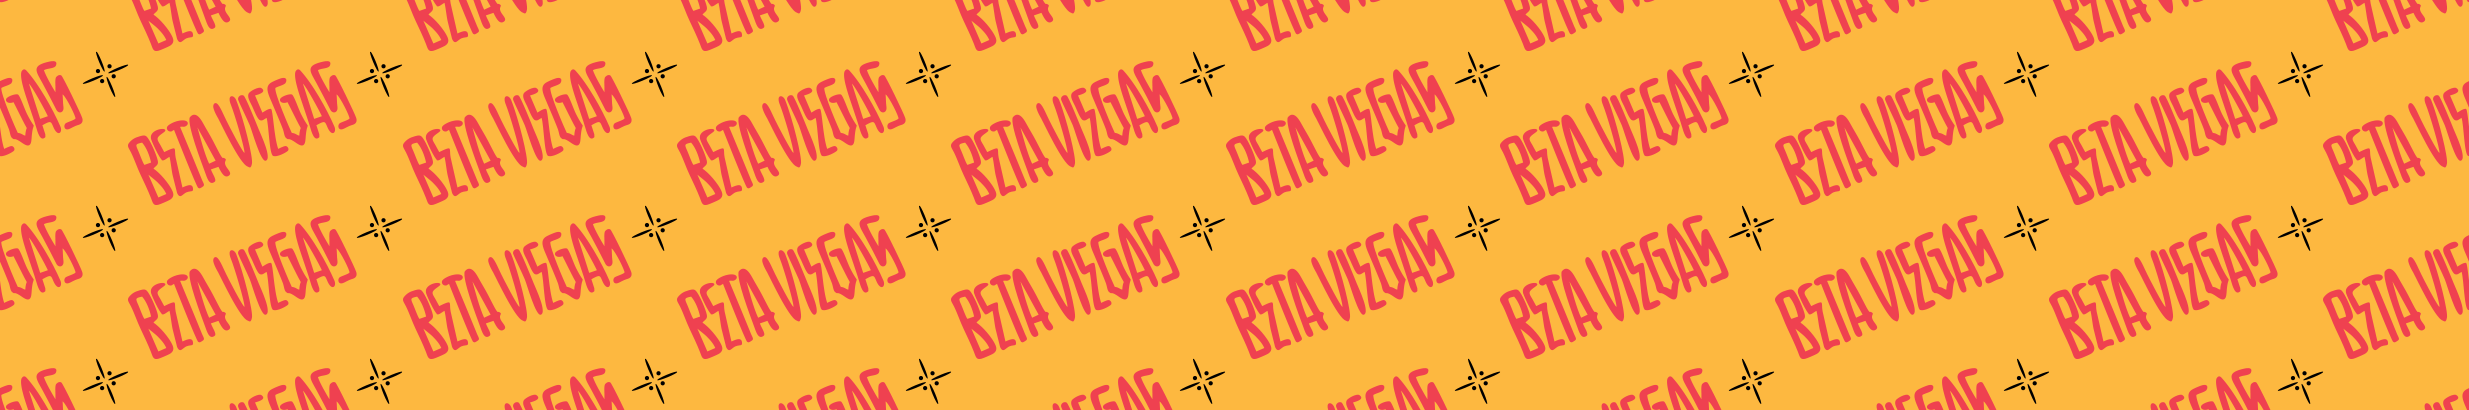 Beta Viegas's profile banner